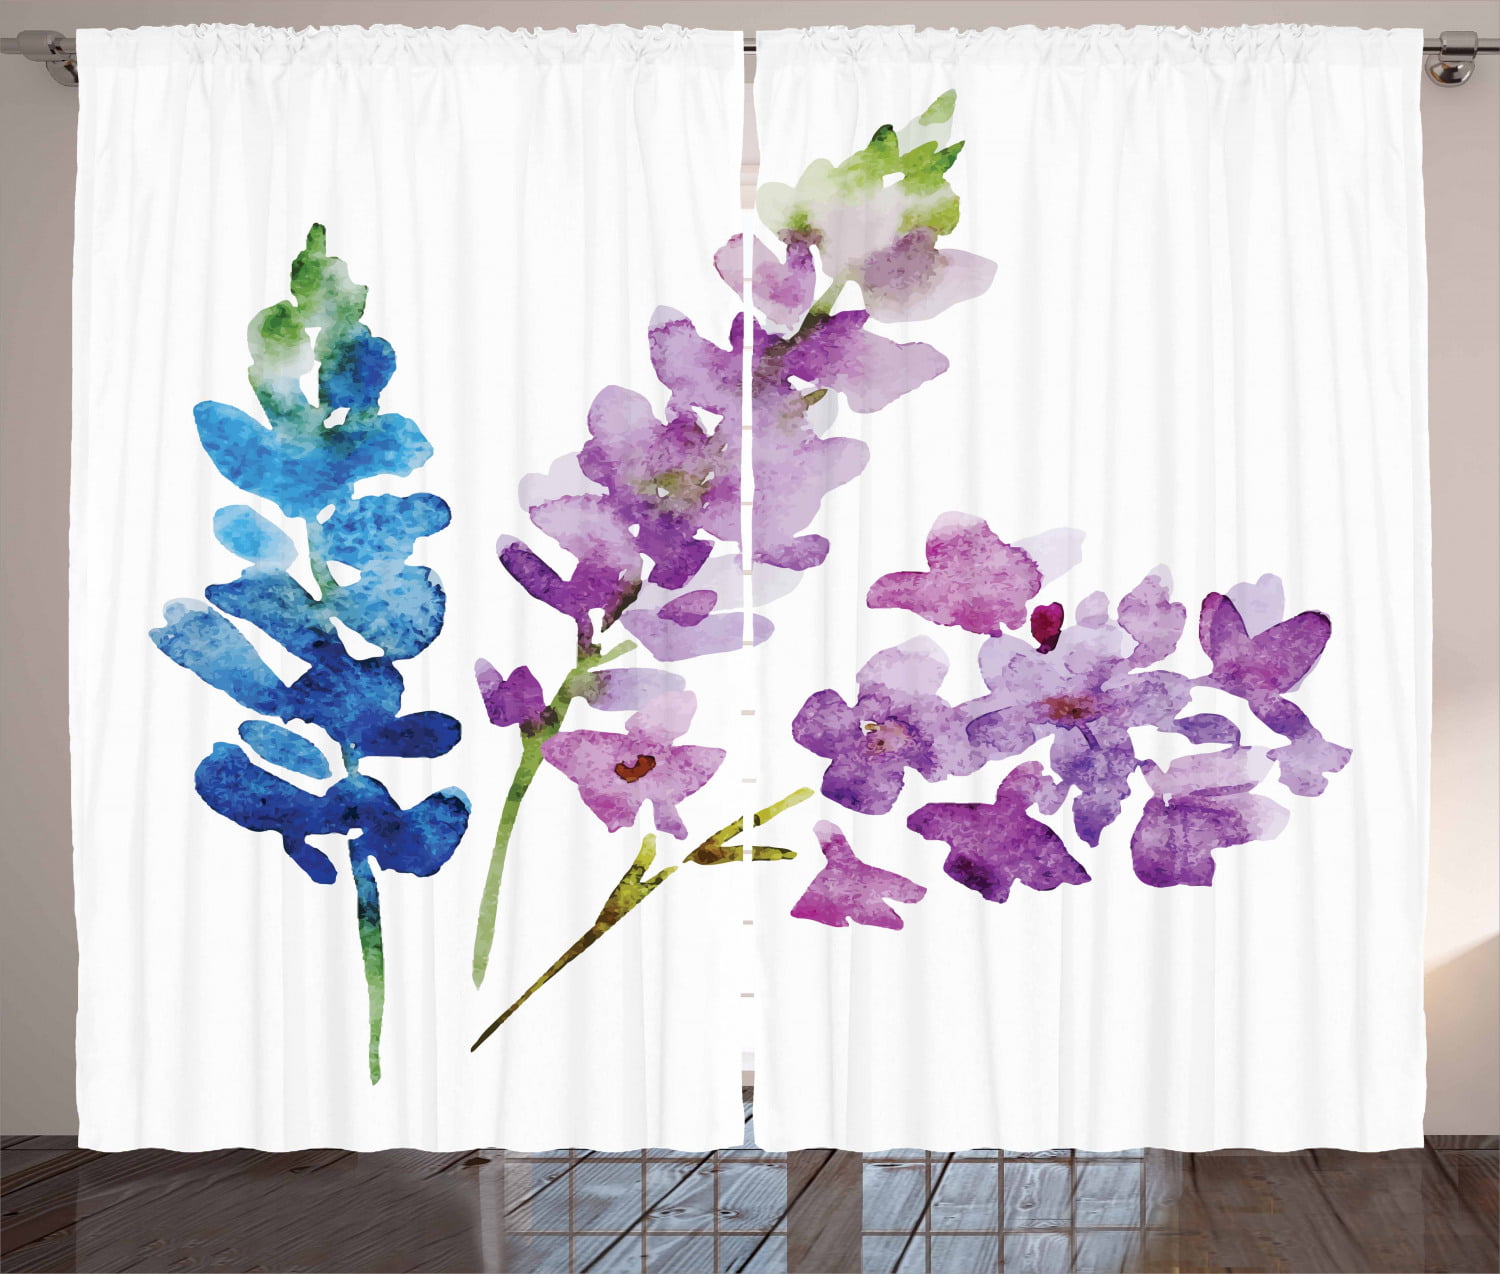 Purple Curtains 2 Panels Set